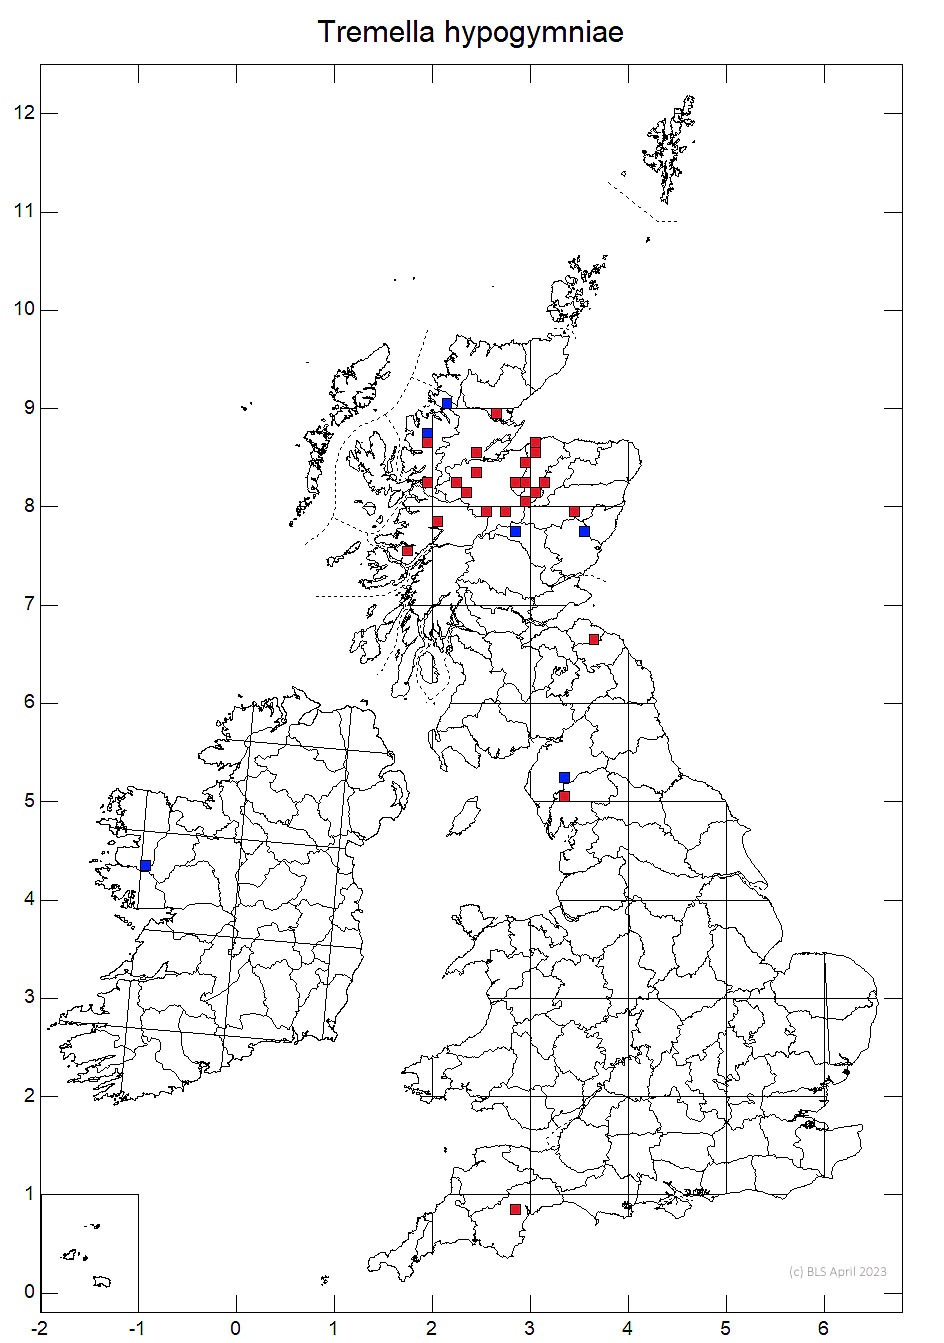 Tremella hypogymniae 10km sq distribution map